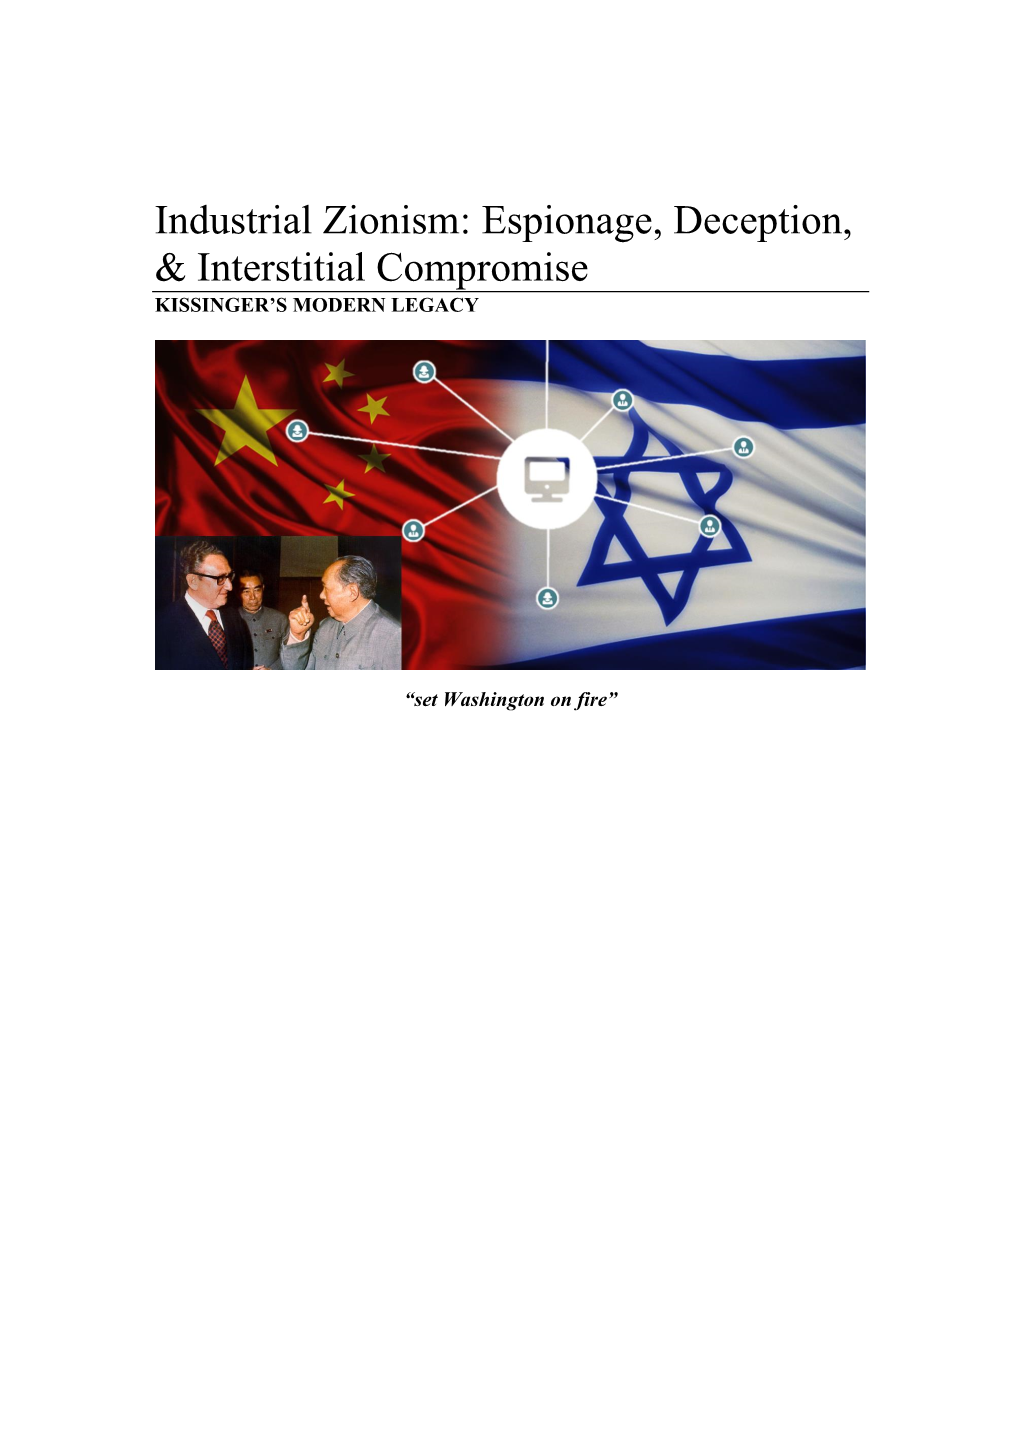 Industrial Zionism: Espionage, Deception, & Interstitial Compromise KISSINGER’S MODERN LEGACY